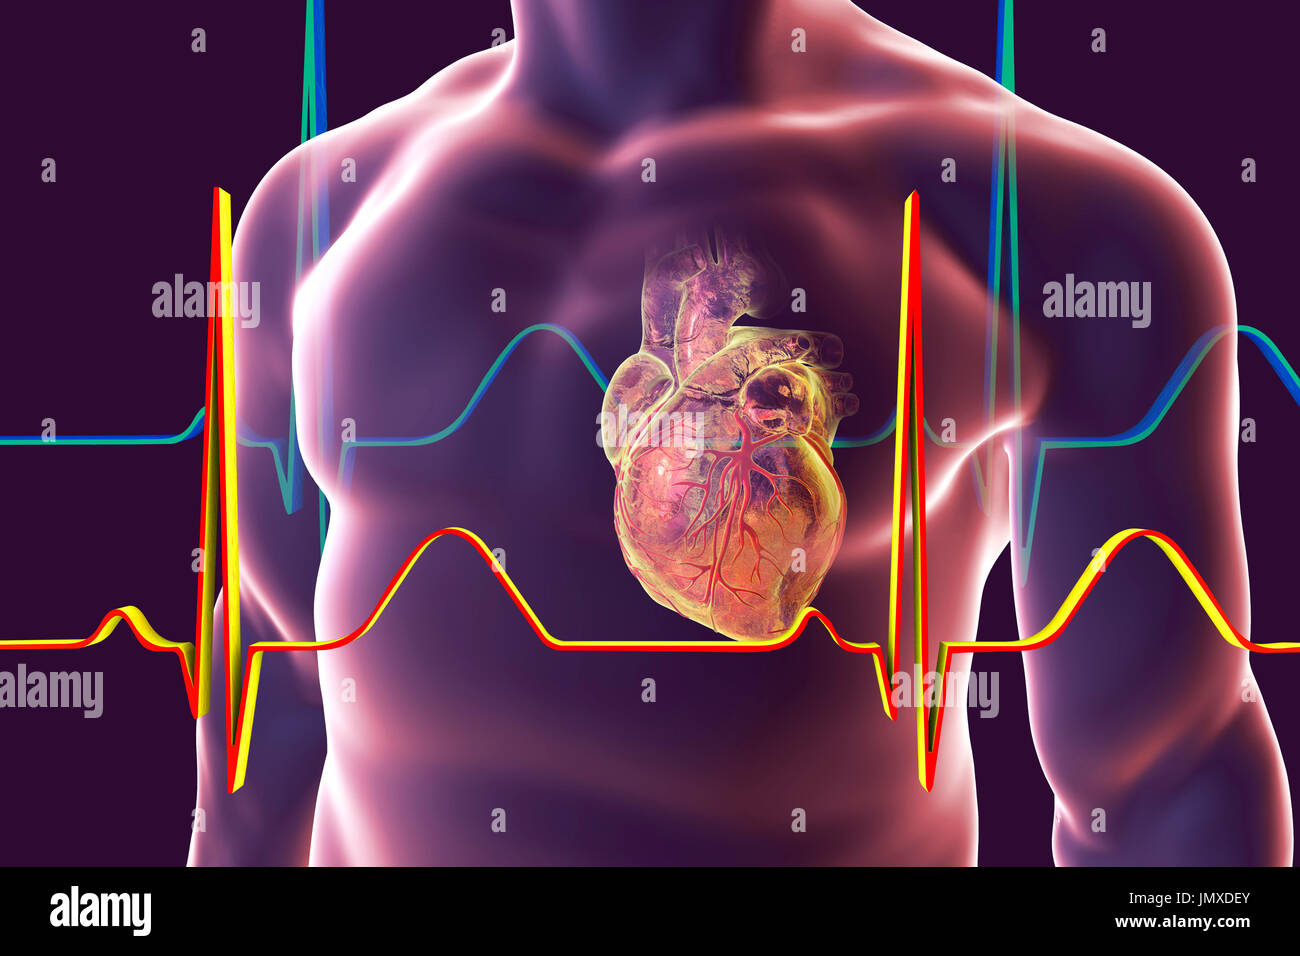 Heart with coronary vessels inside human body, computer illustration. Stock Photo